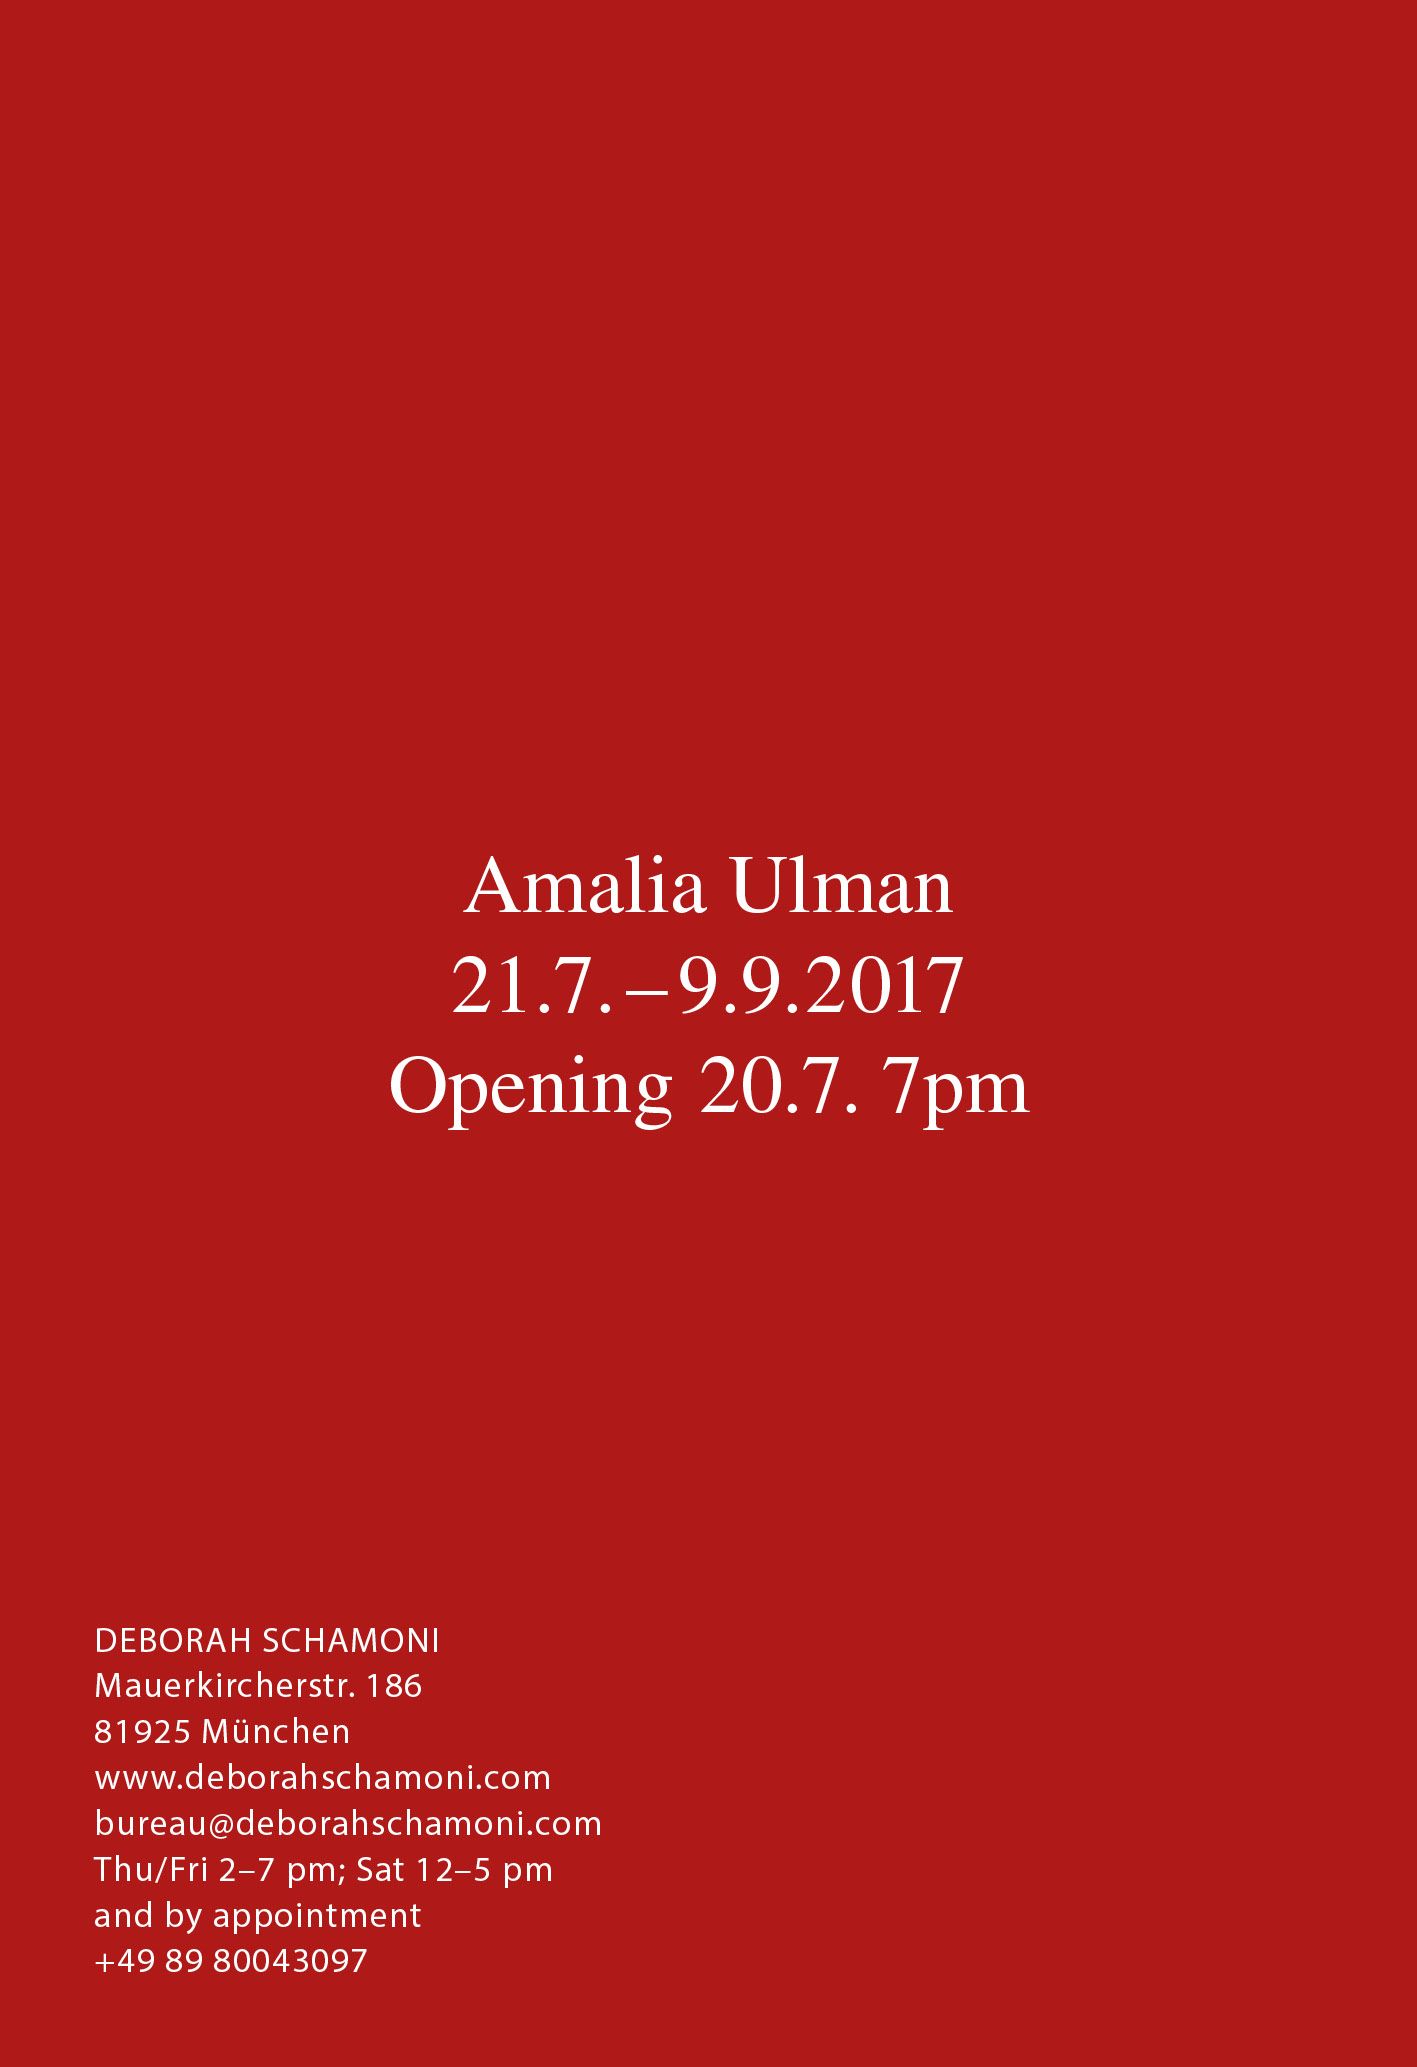 ds_201707_amalia-ulman2